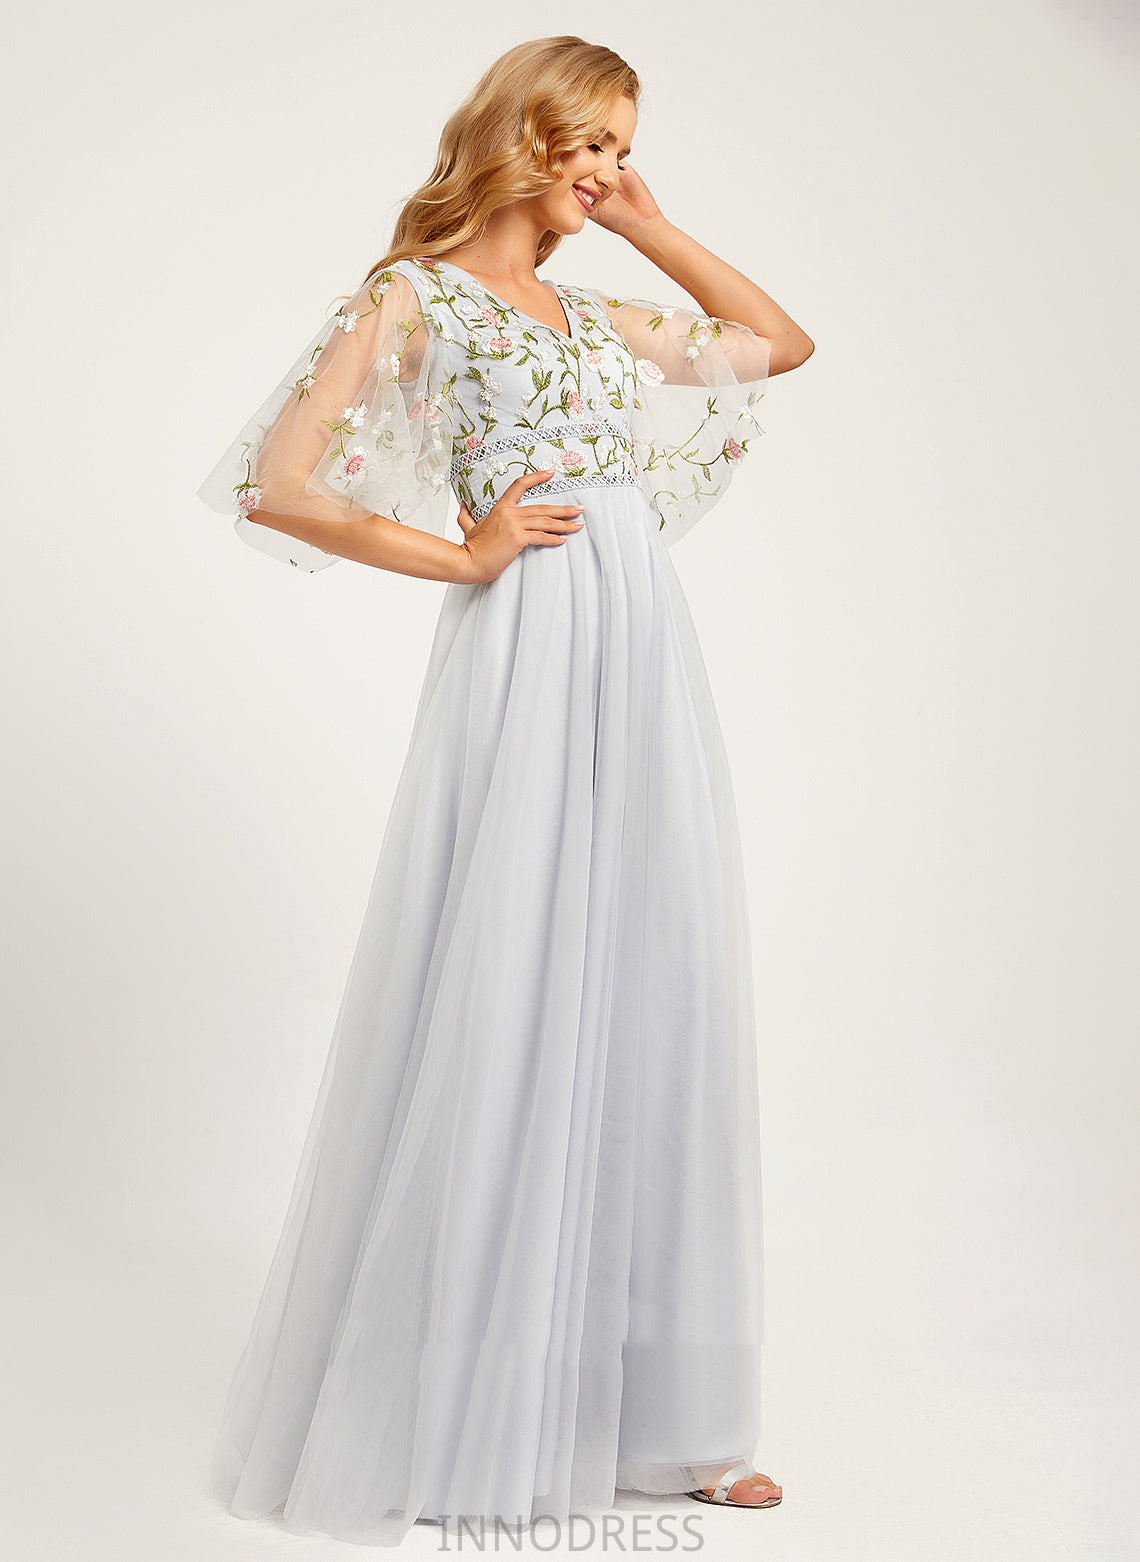 Flower(s) Neckline Silhouette A-Line V-neck Embellishment Floor-Length Fabric Length Zoie Floor Length Sleeveless Bridesmaid Dresses